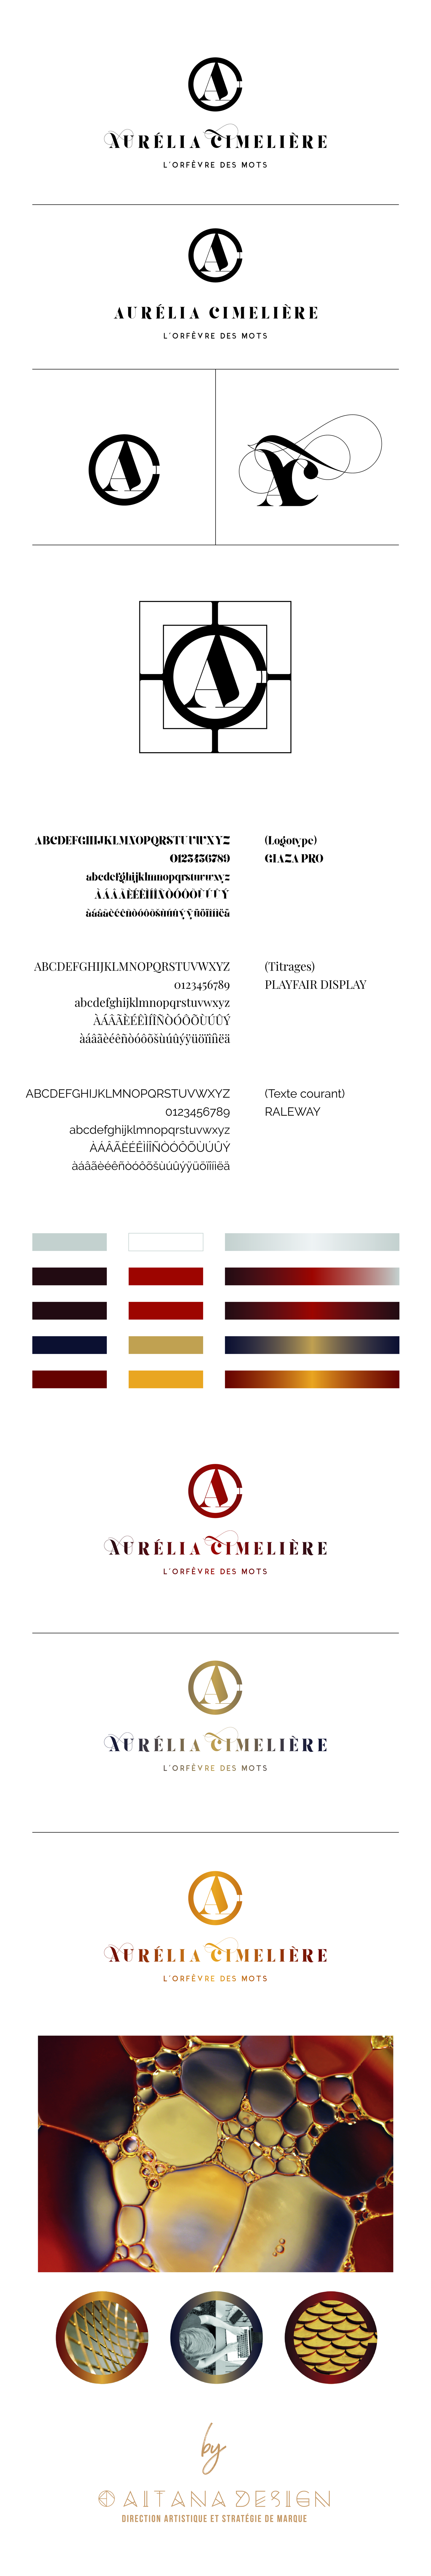 Branding-DA-Aurelia-Cimeliere-By-Aitana-Design